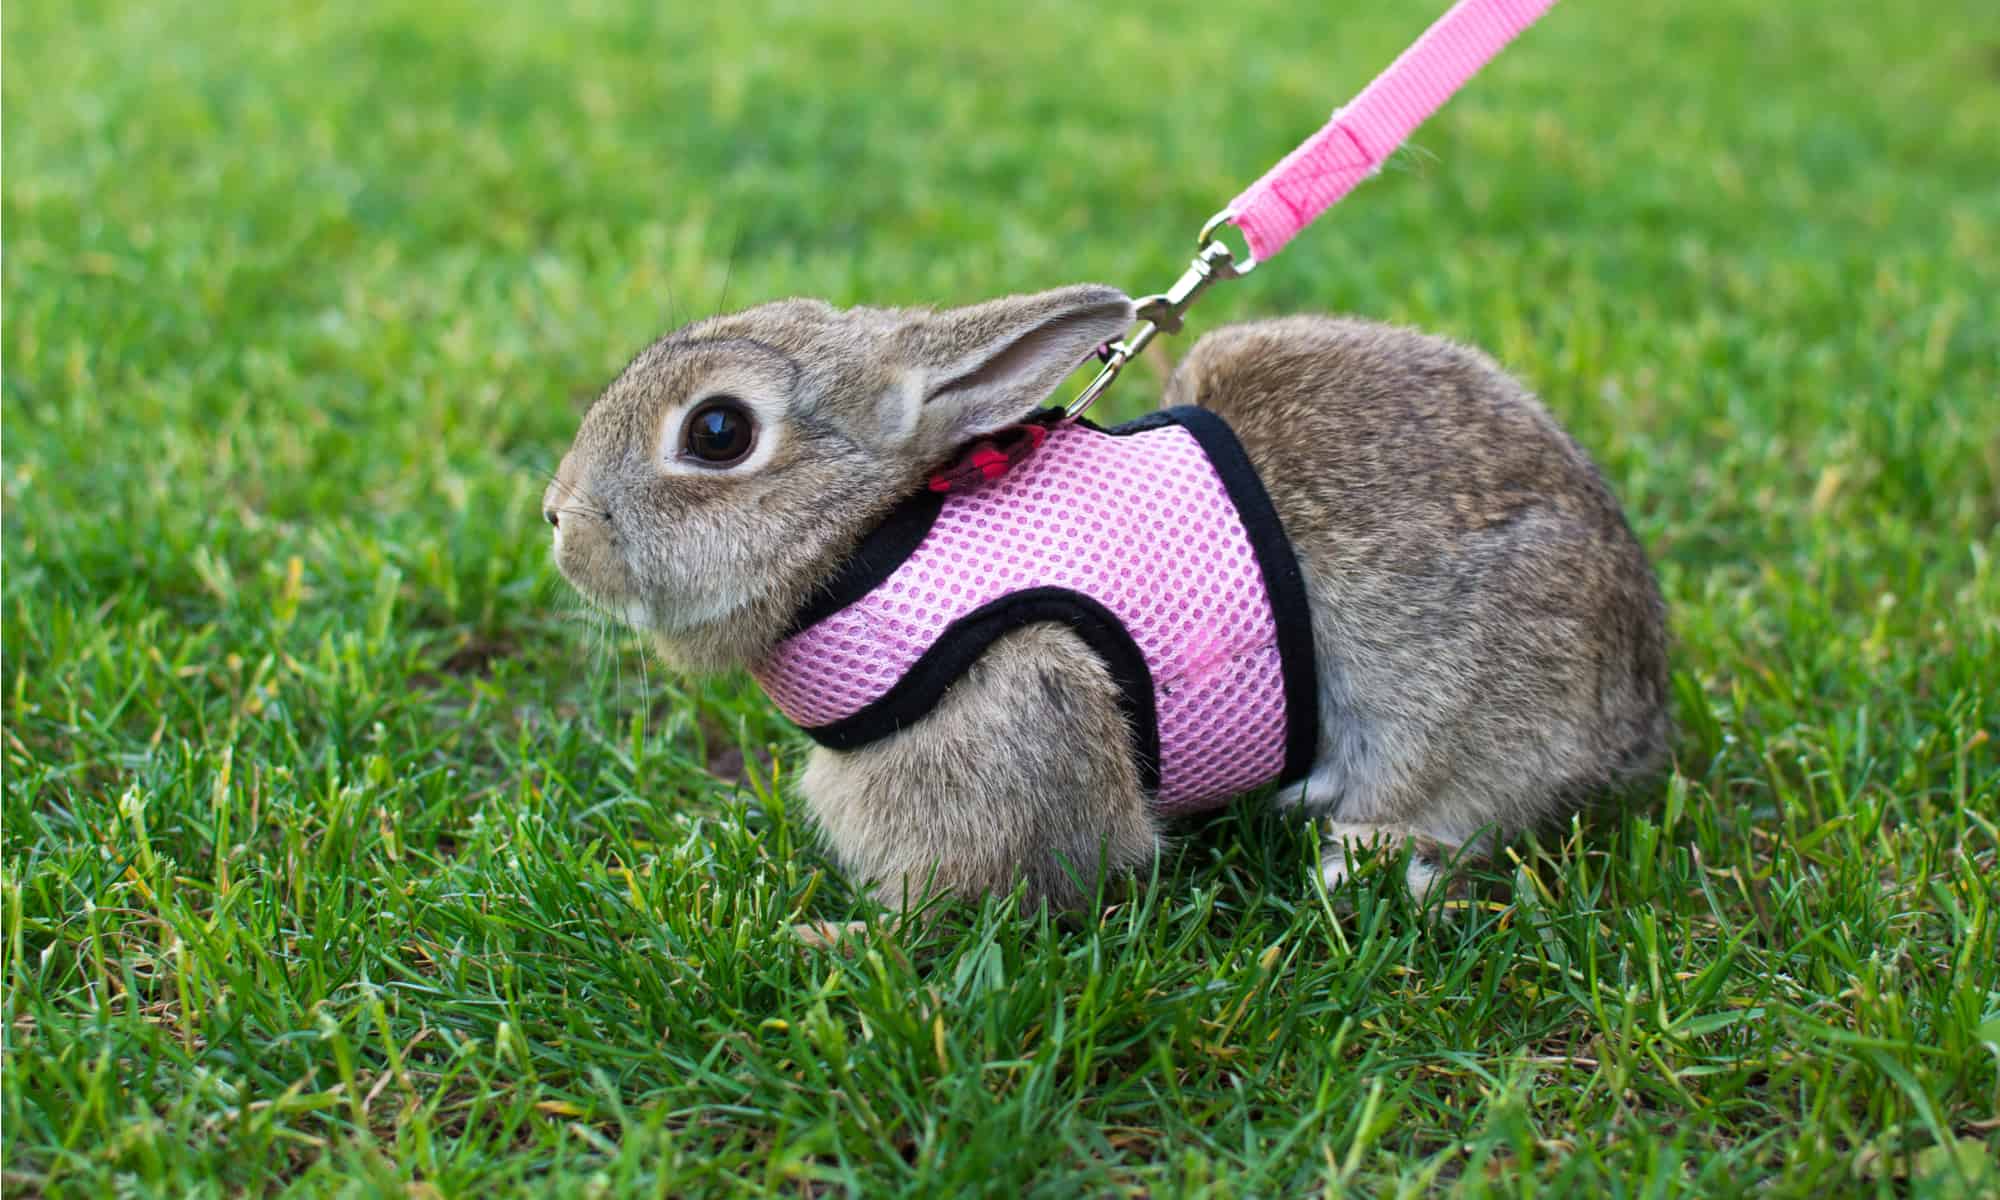 Niteangel Adjustable Soft Harness with Elastic Leash for Rabbits S, Grey